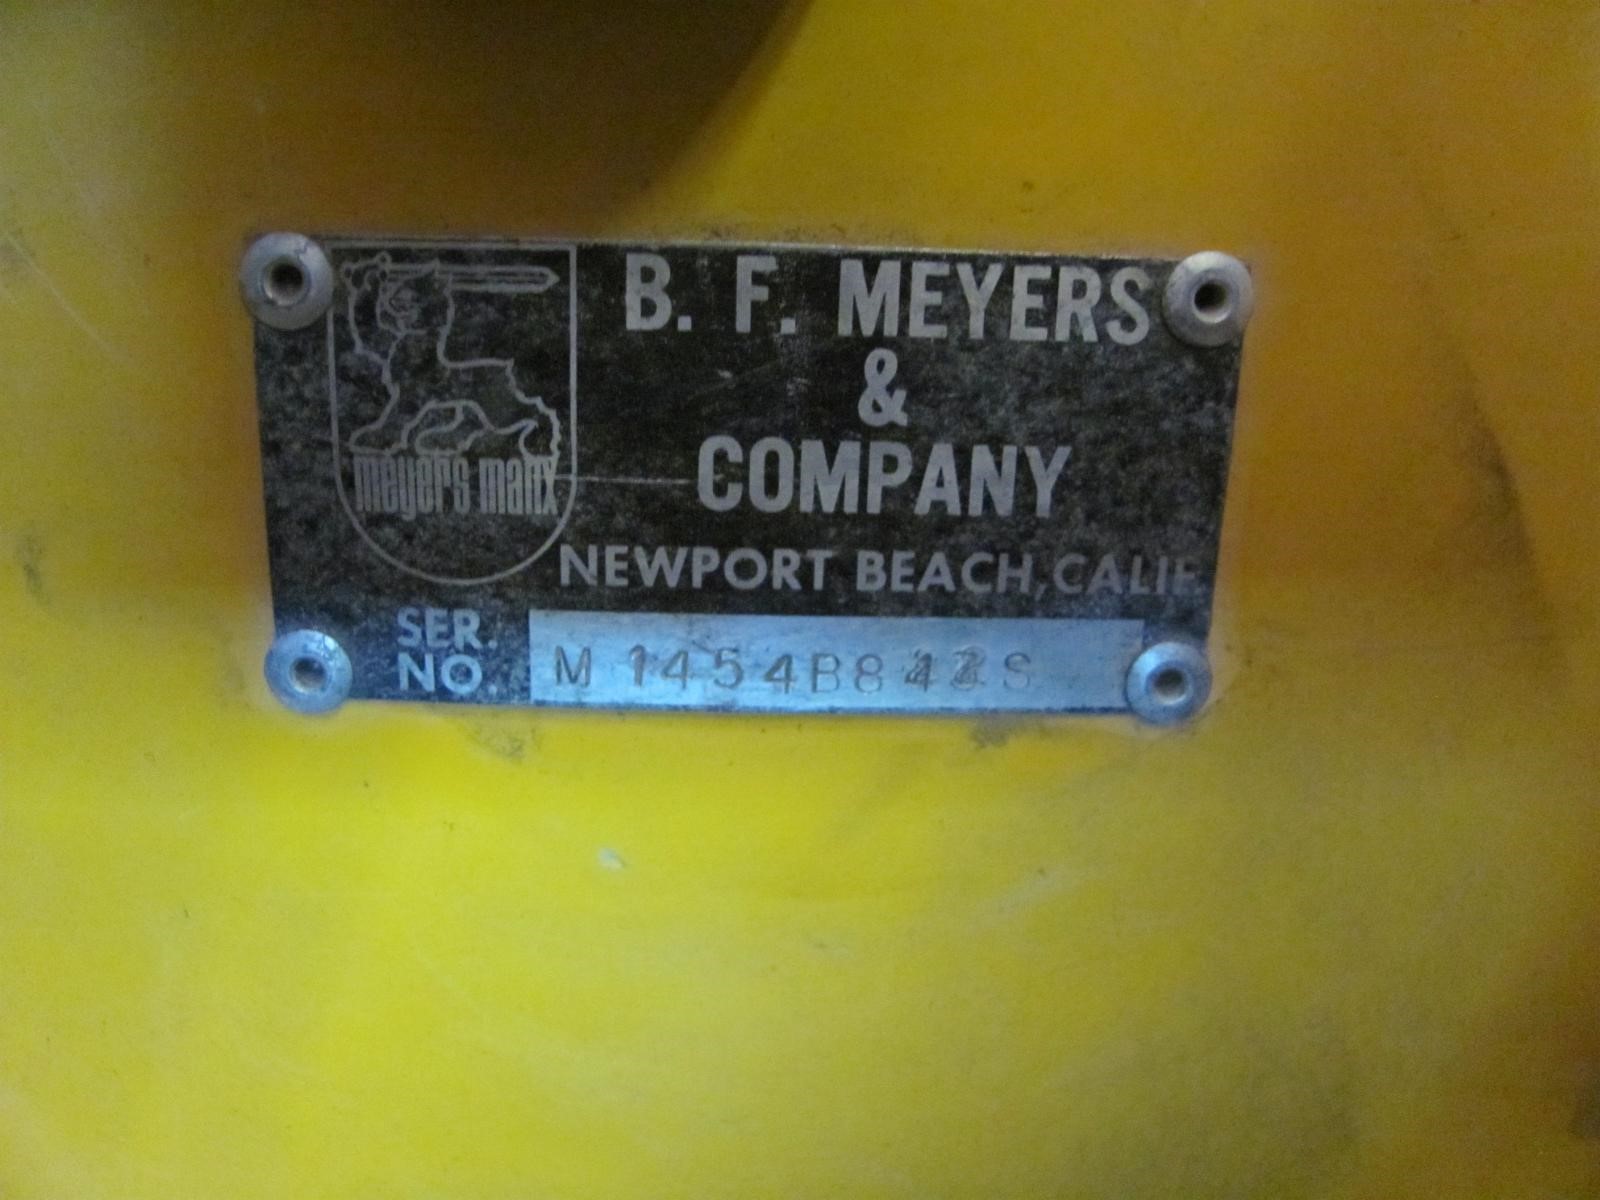 The Meyers' company nameplate.